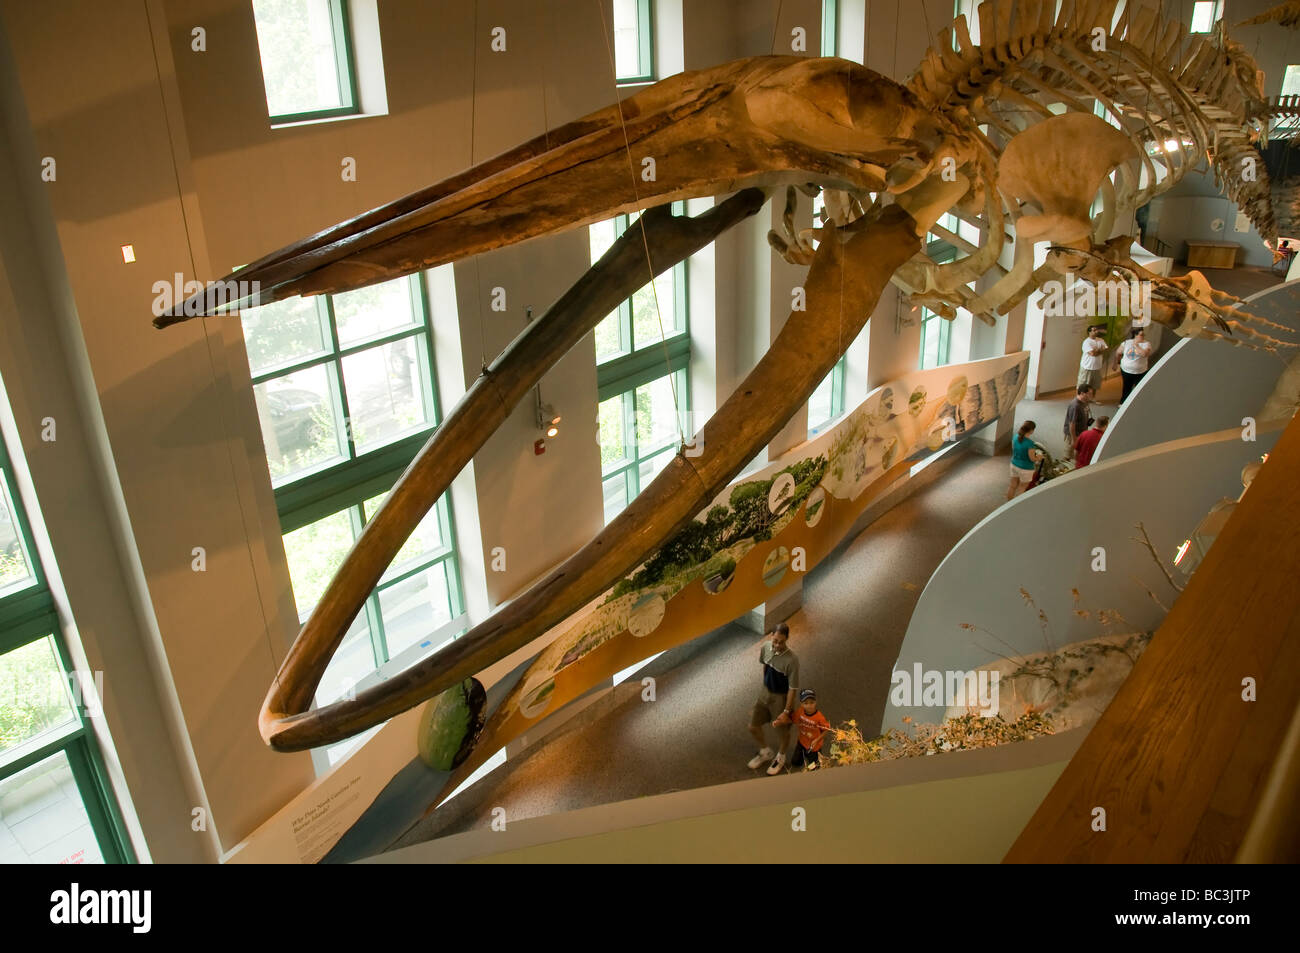 North Carolina Museum of Natural Sciences. Stock Photo